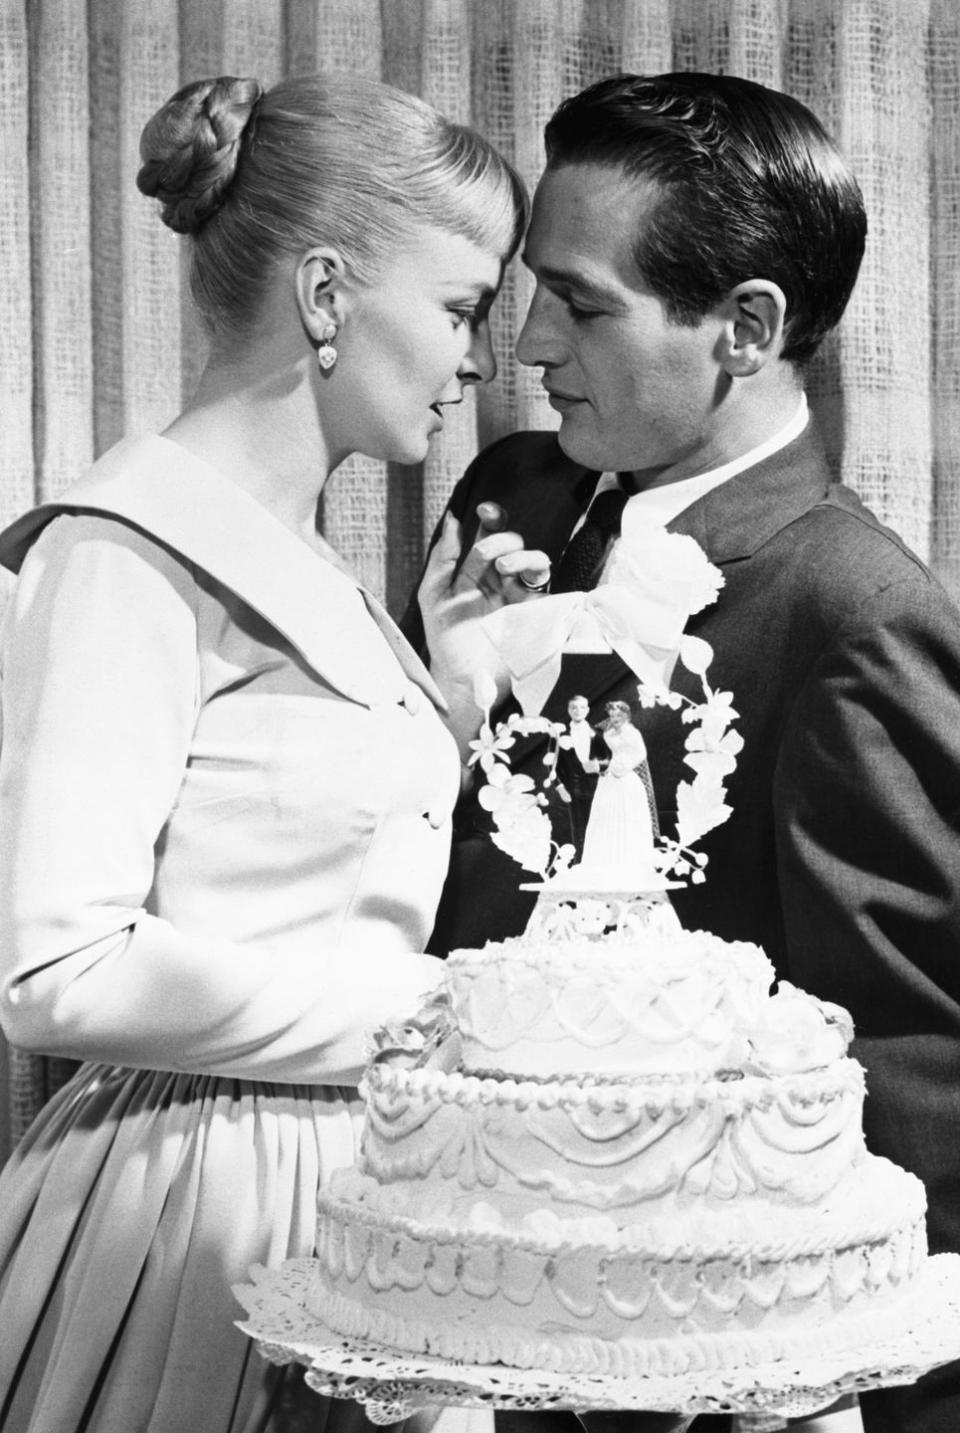 1958: Joanne Woodward and Paul Newman